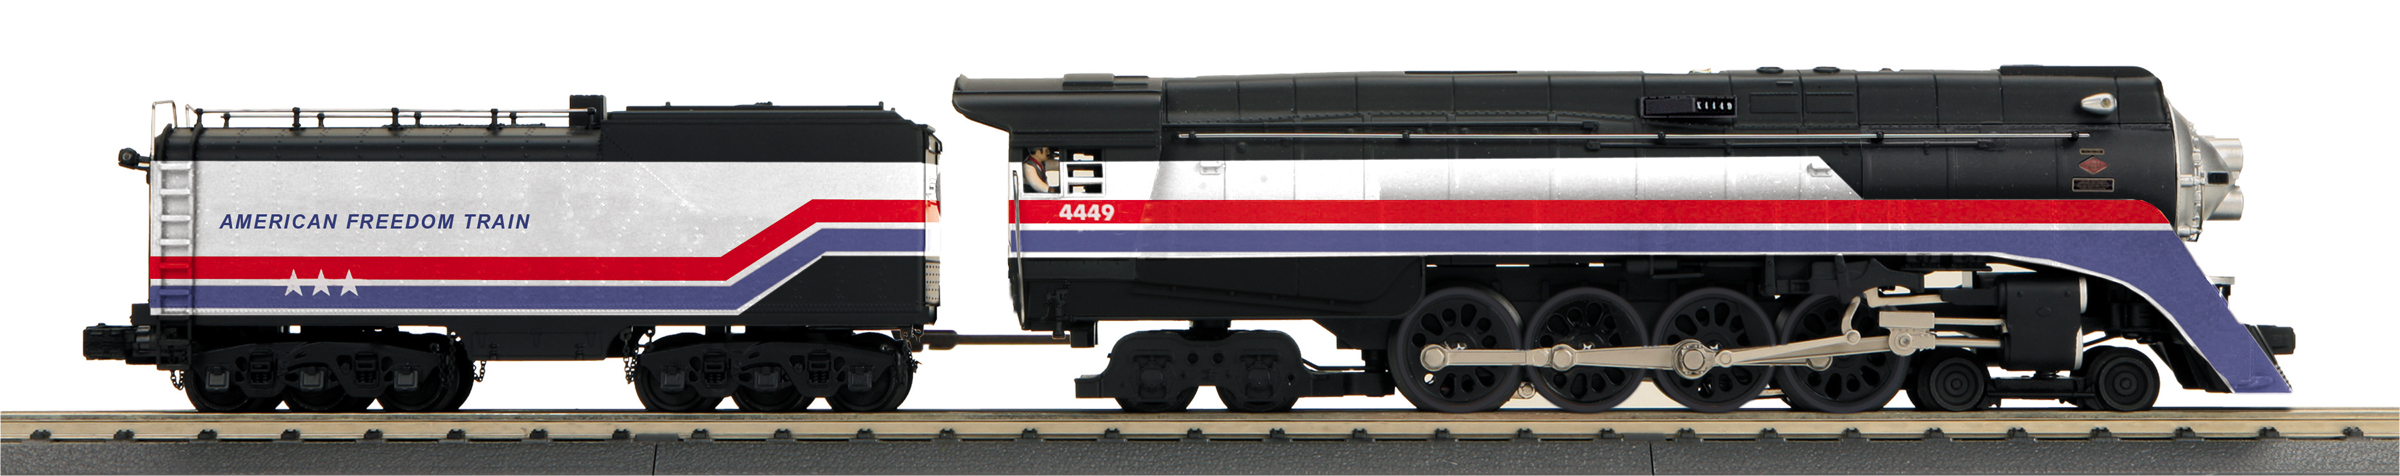 American Freedom Train 4-8-4 GS-4 Northern Steam Engine image